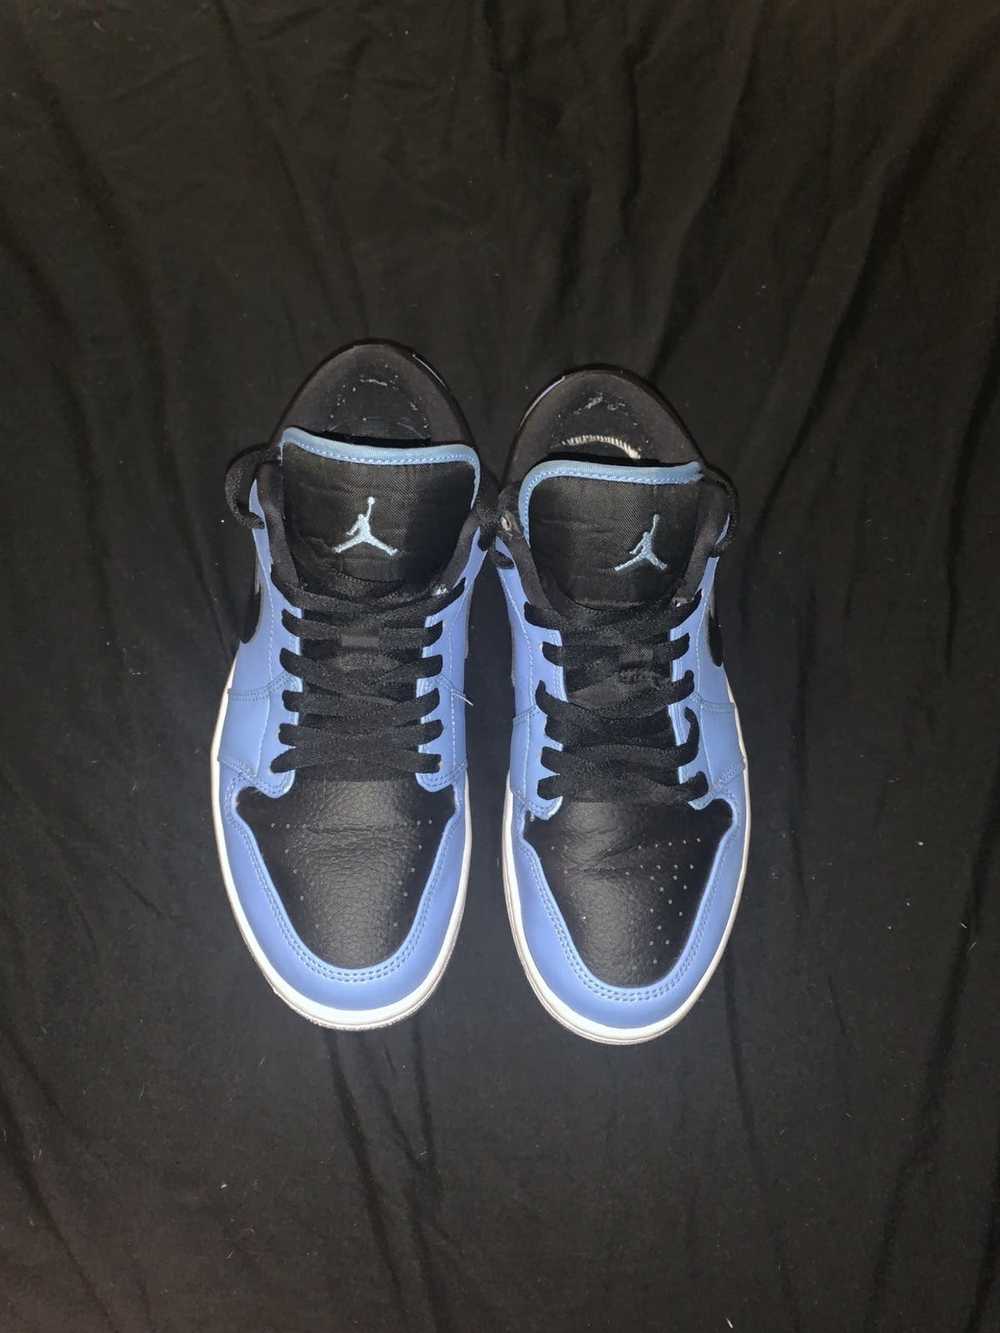 Jordan Brand × Nike Jordan 1 low unc blue black - image 2